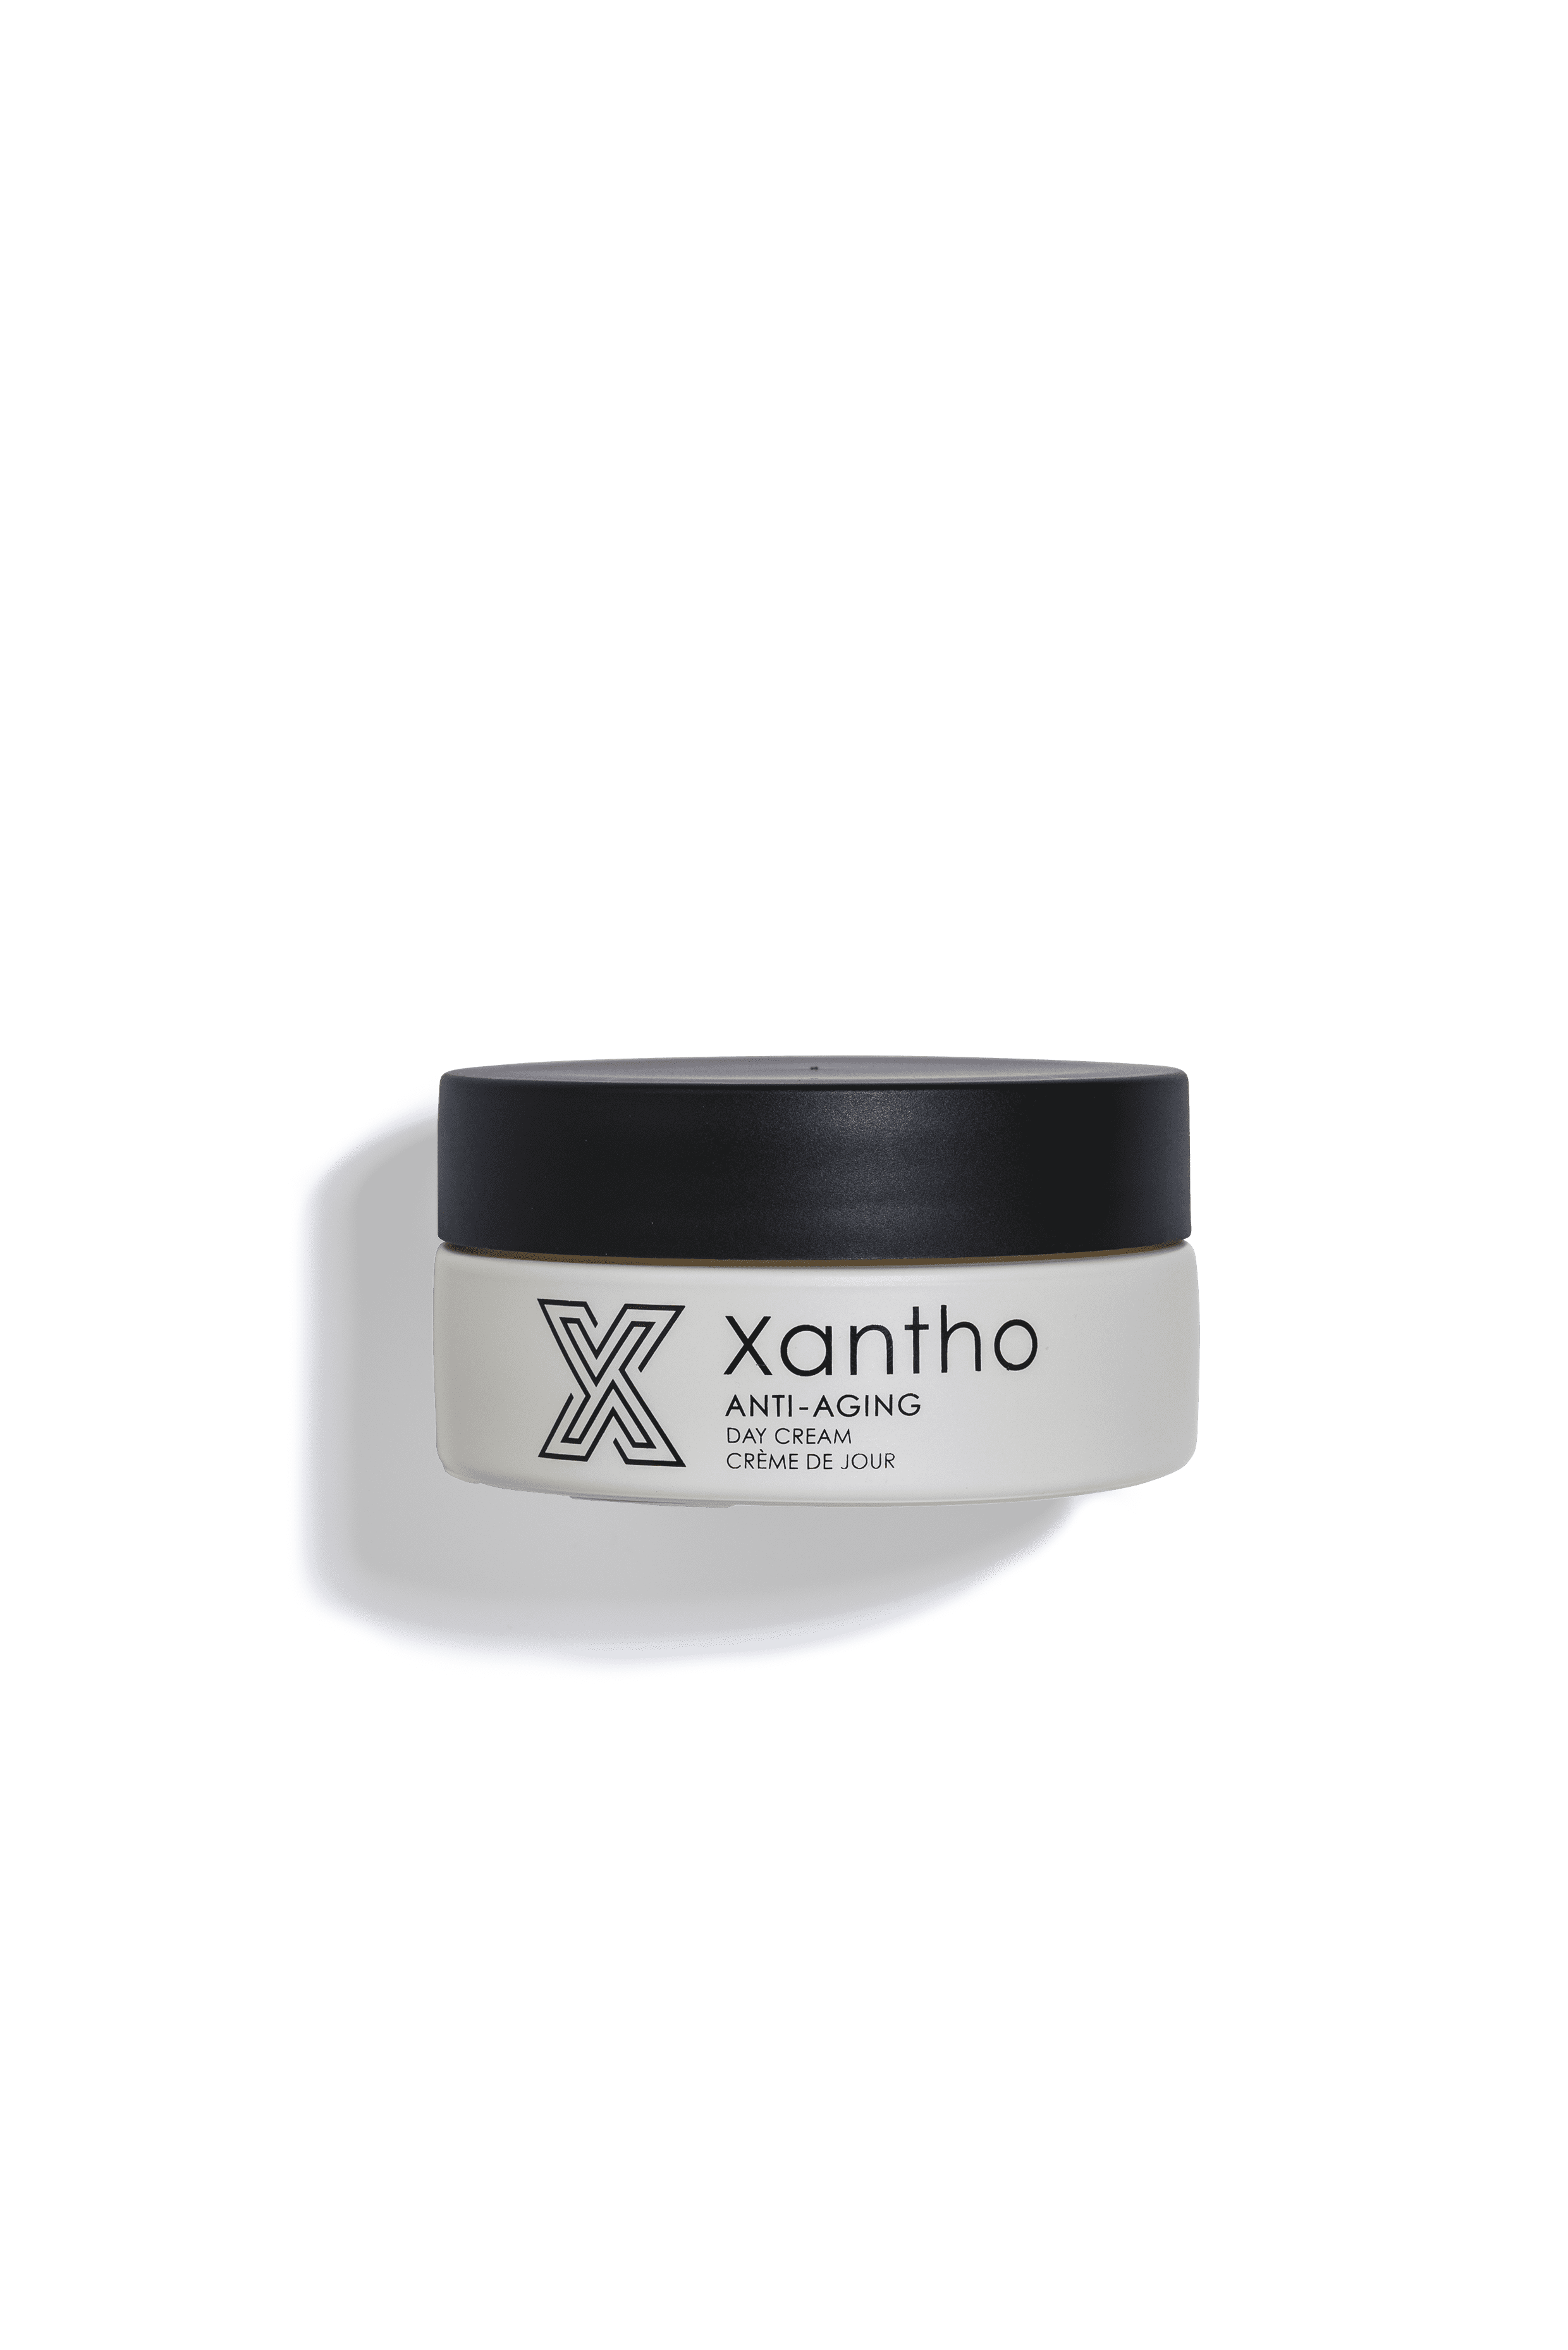 Xantho Travel Kit Dagcrème alle huidtypes